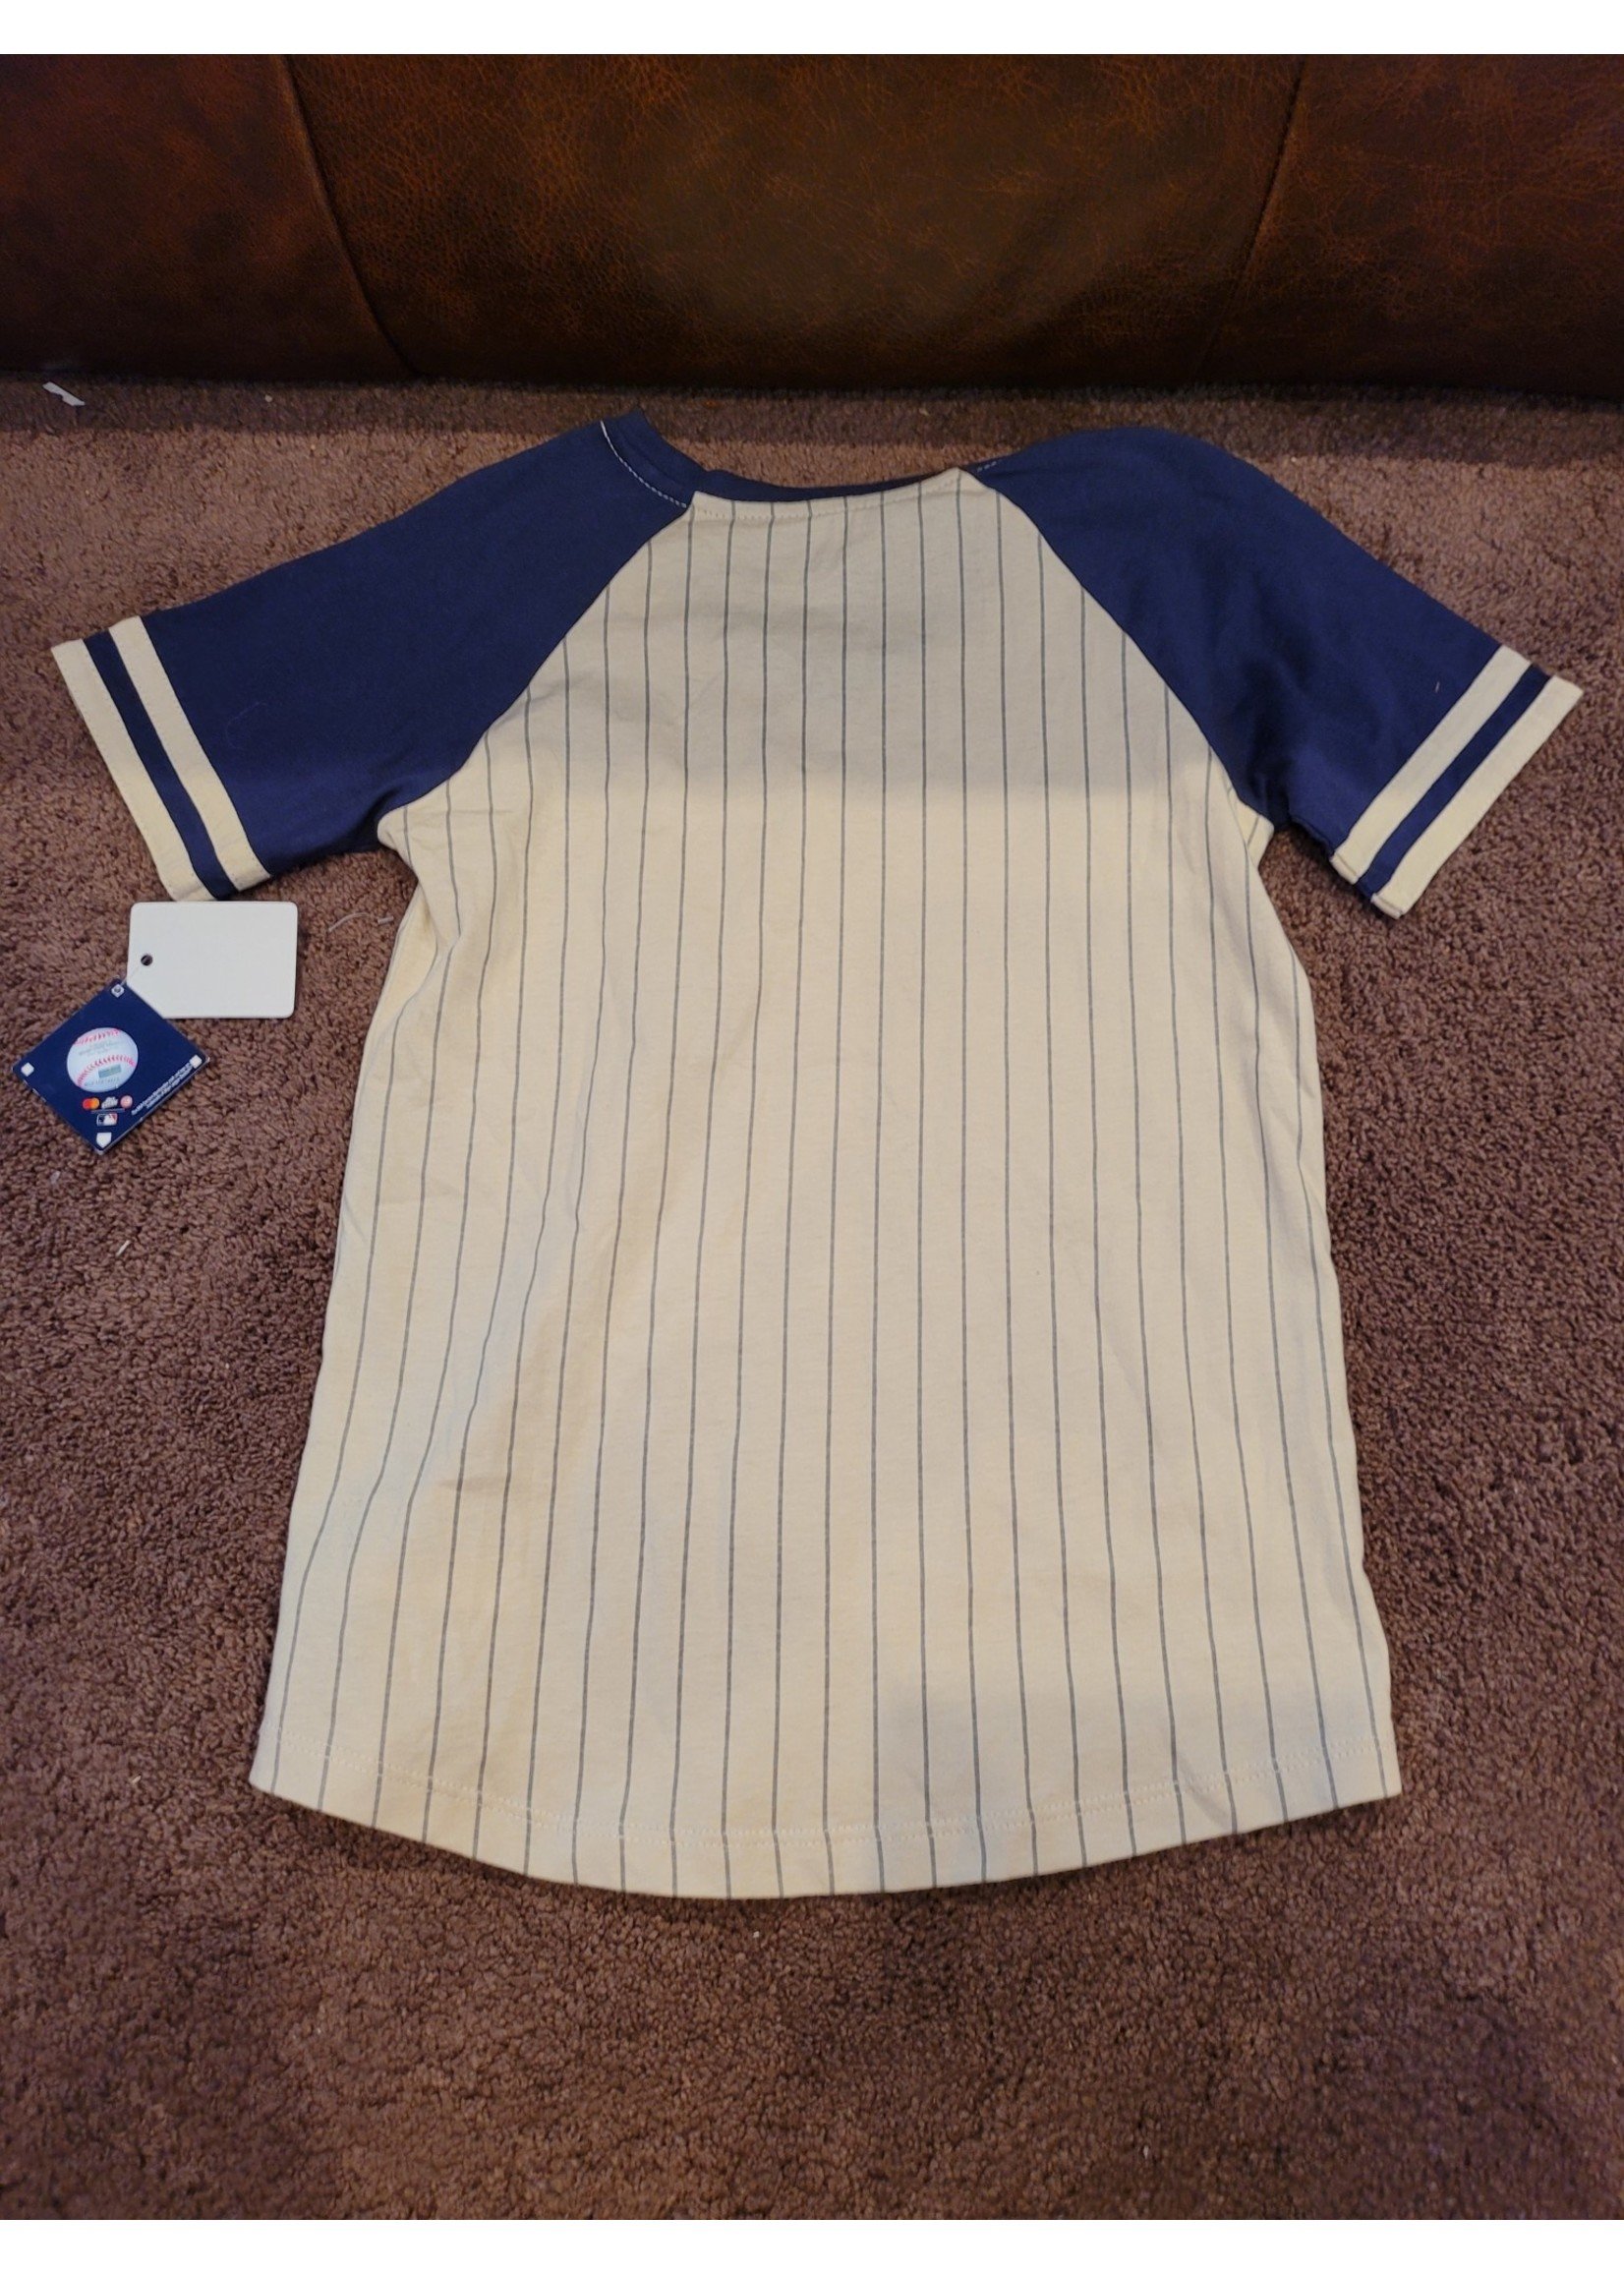 Girls Medium 7/8 Pinstripe V-Neck T-Shirt Cleveland Indians